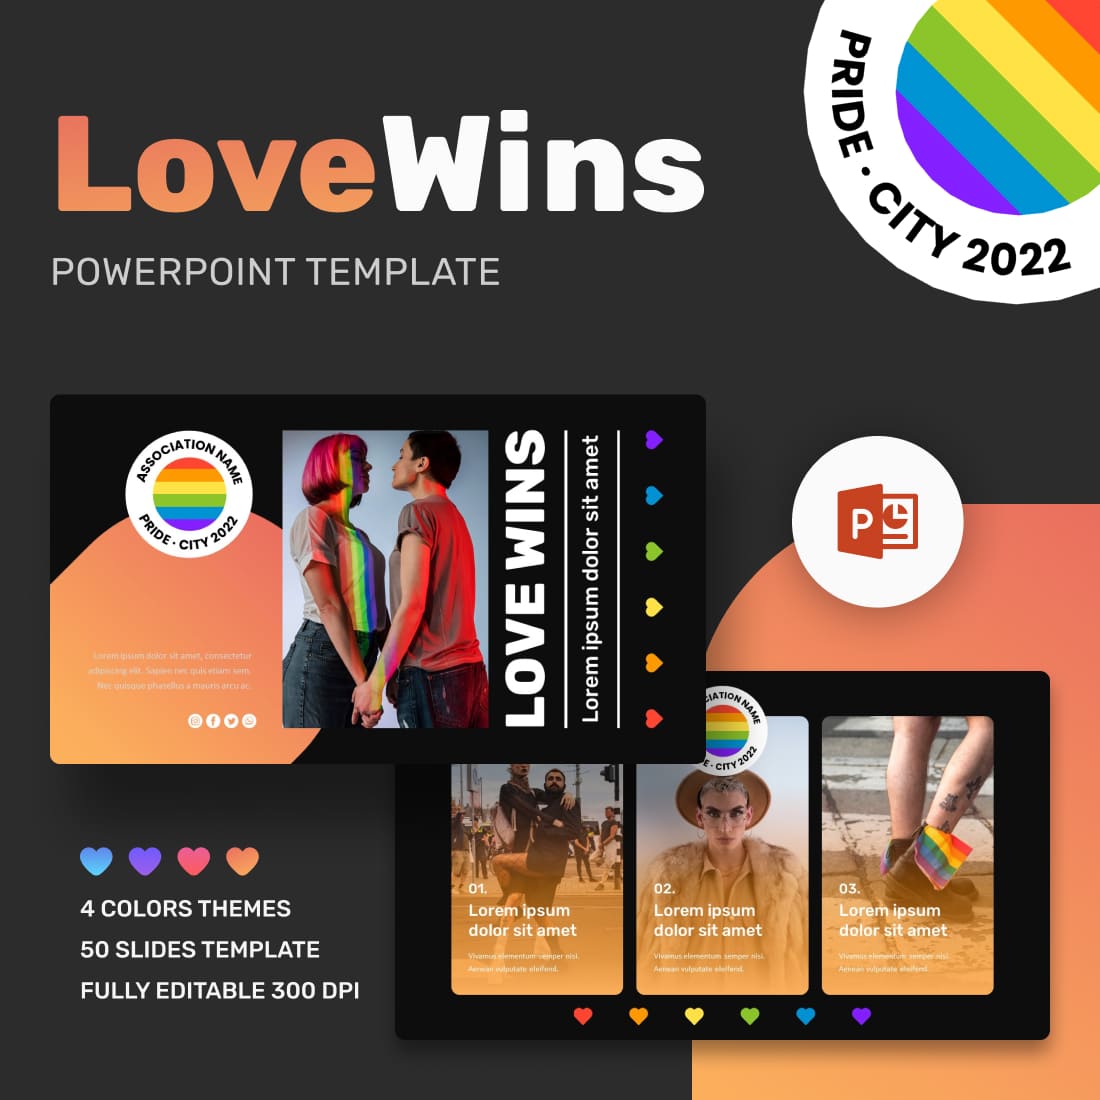 Love Wins LGBT PowerPoint Template.